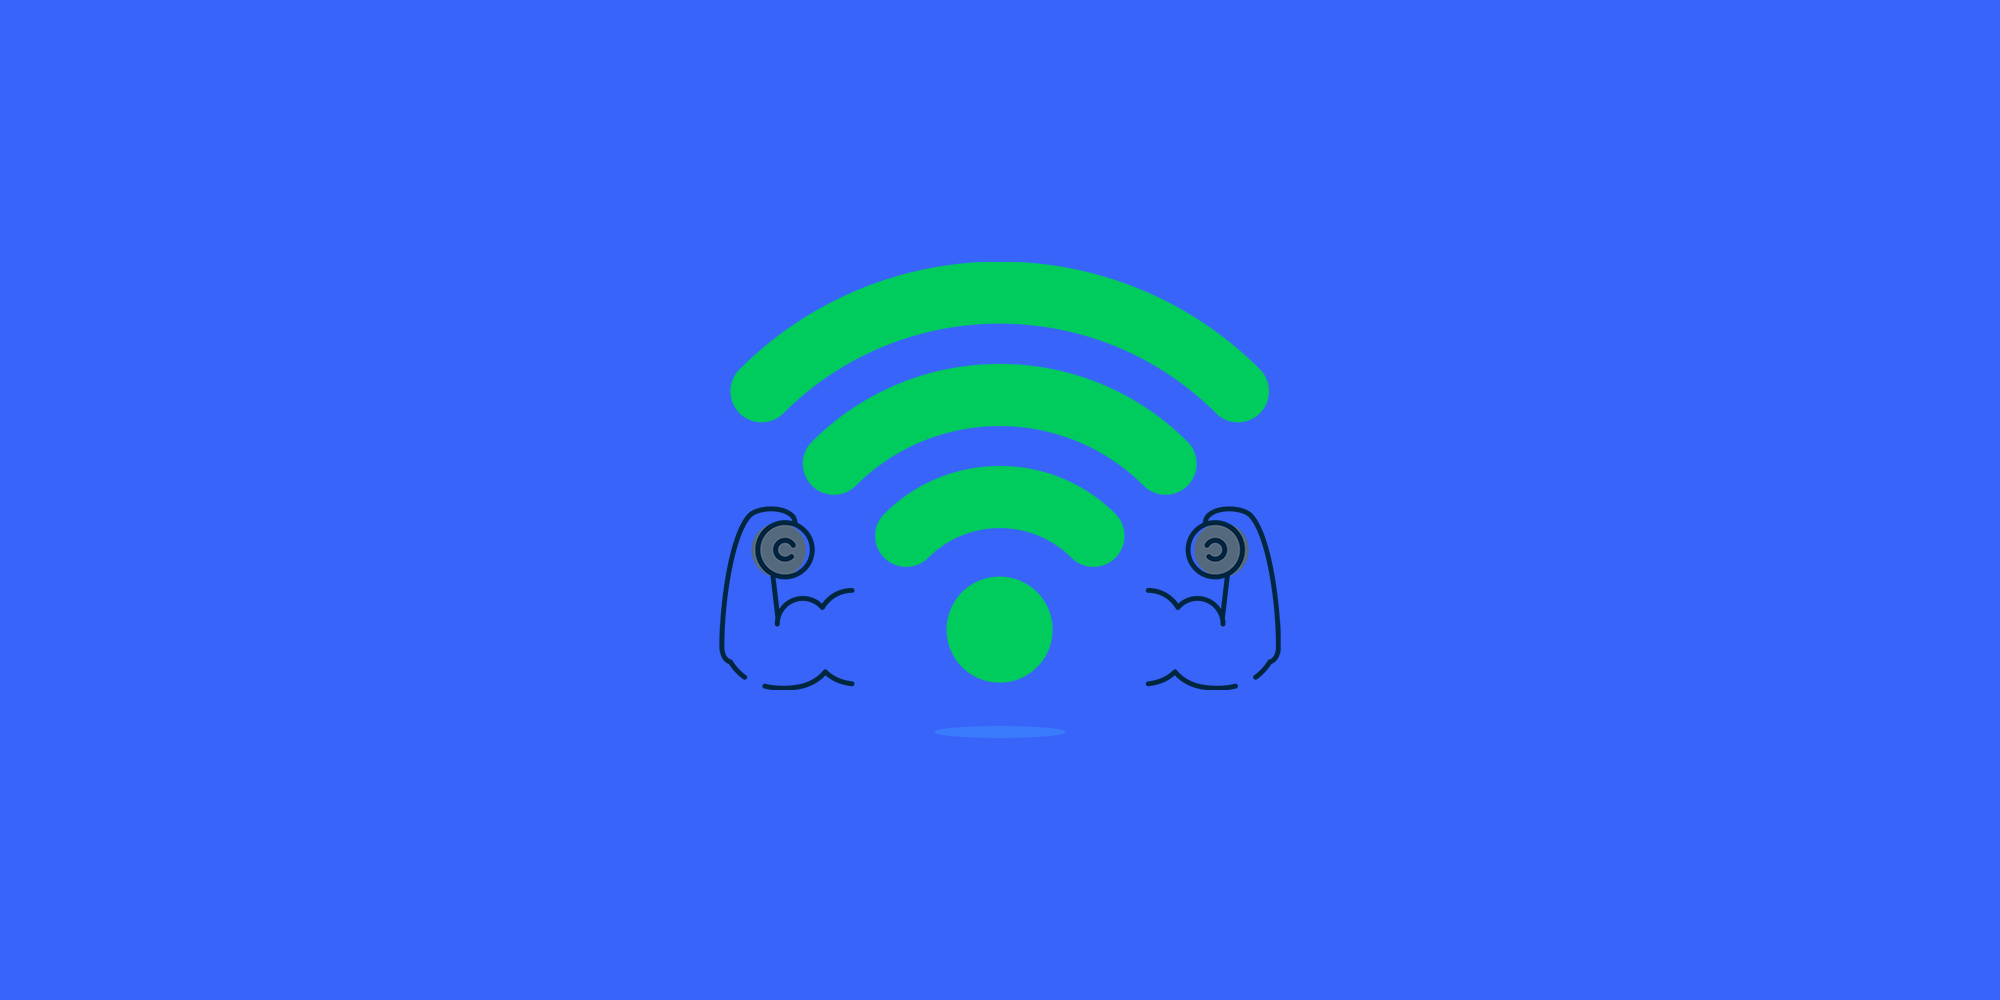 wifi signal strength app